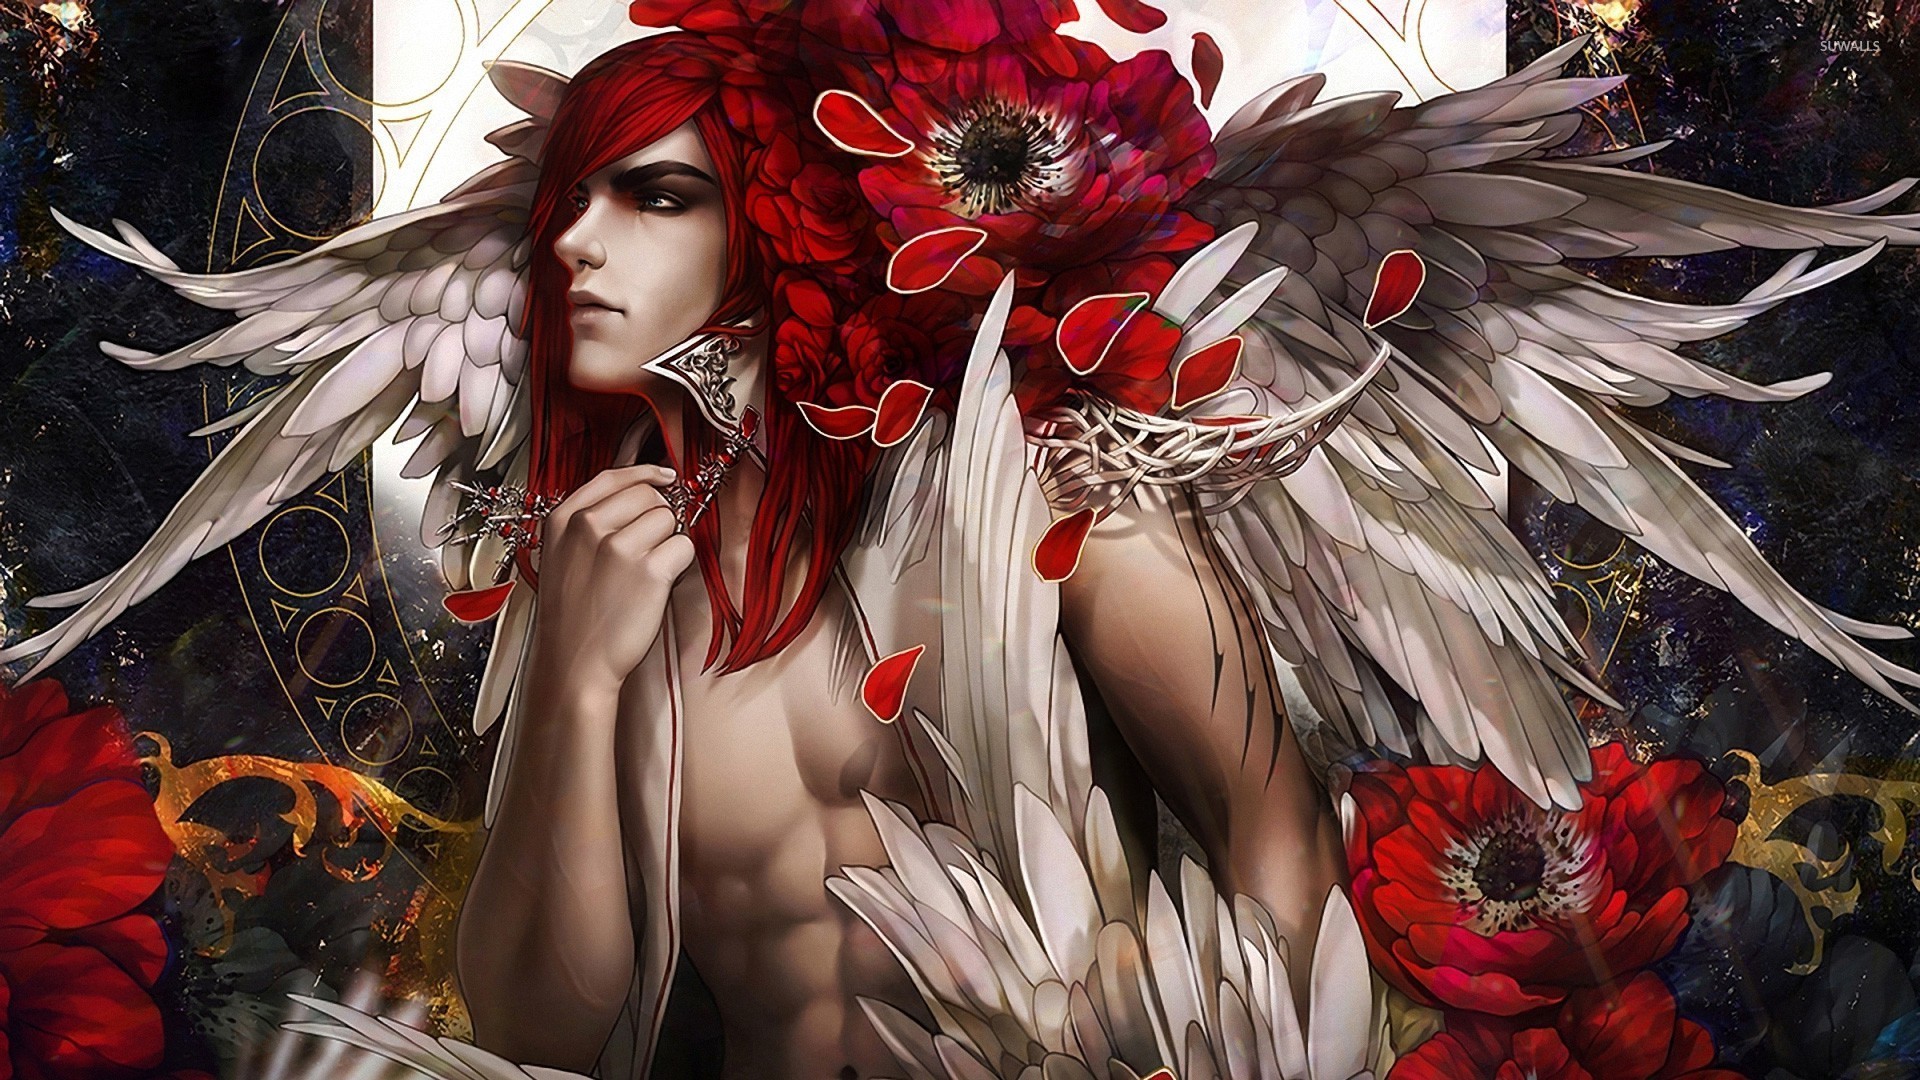 Archangel wallpaper - Fantasy wallpapers - #24727